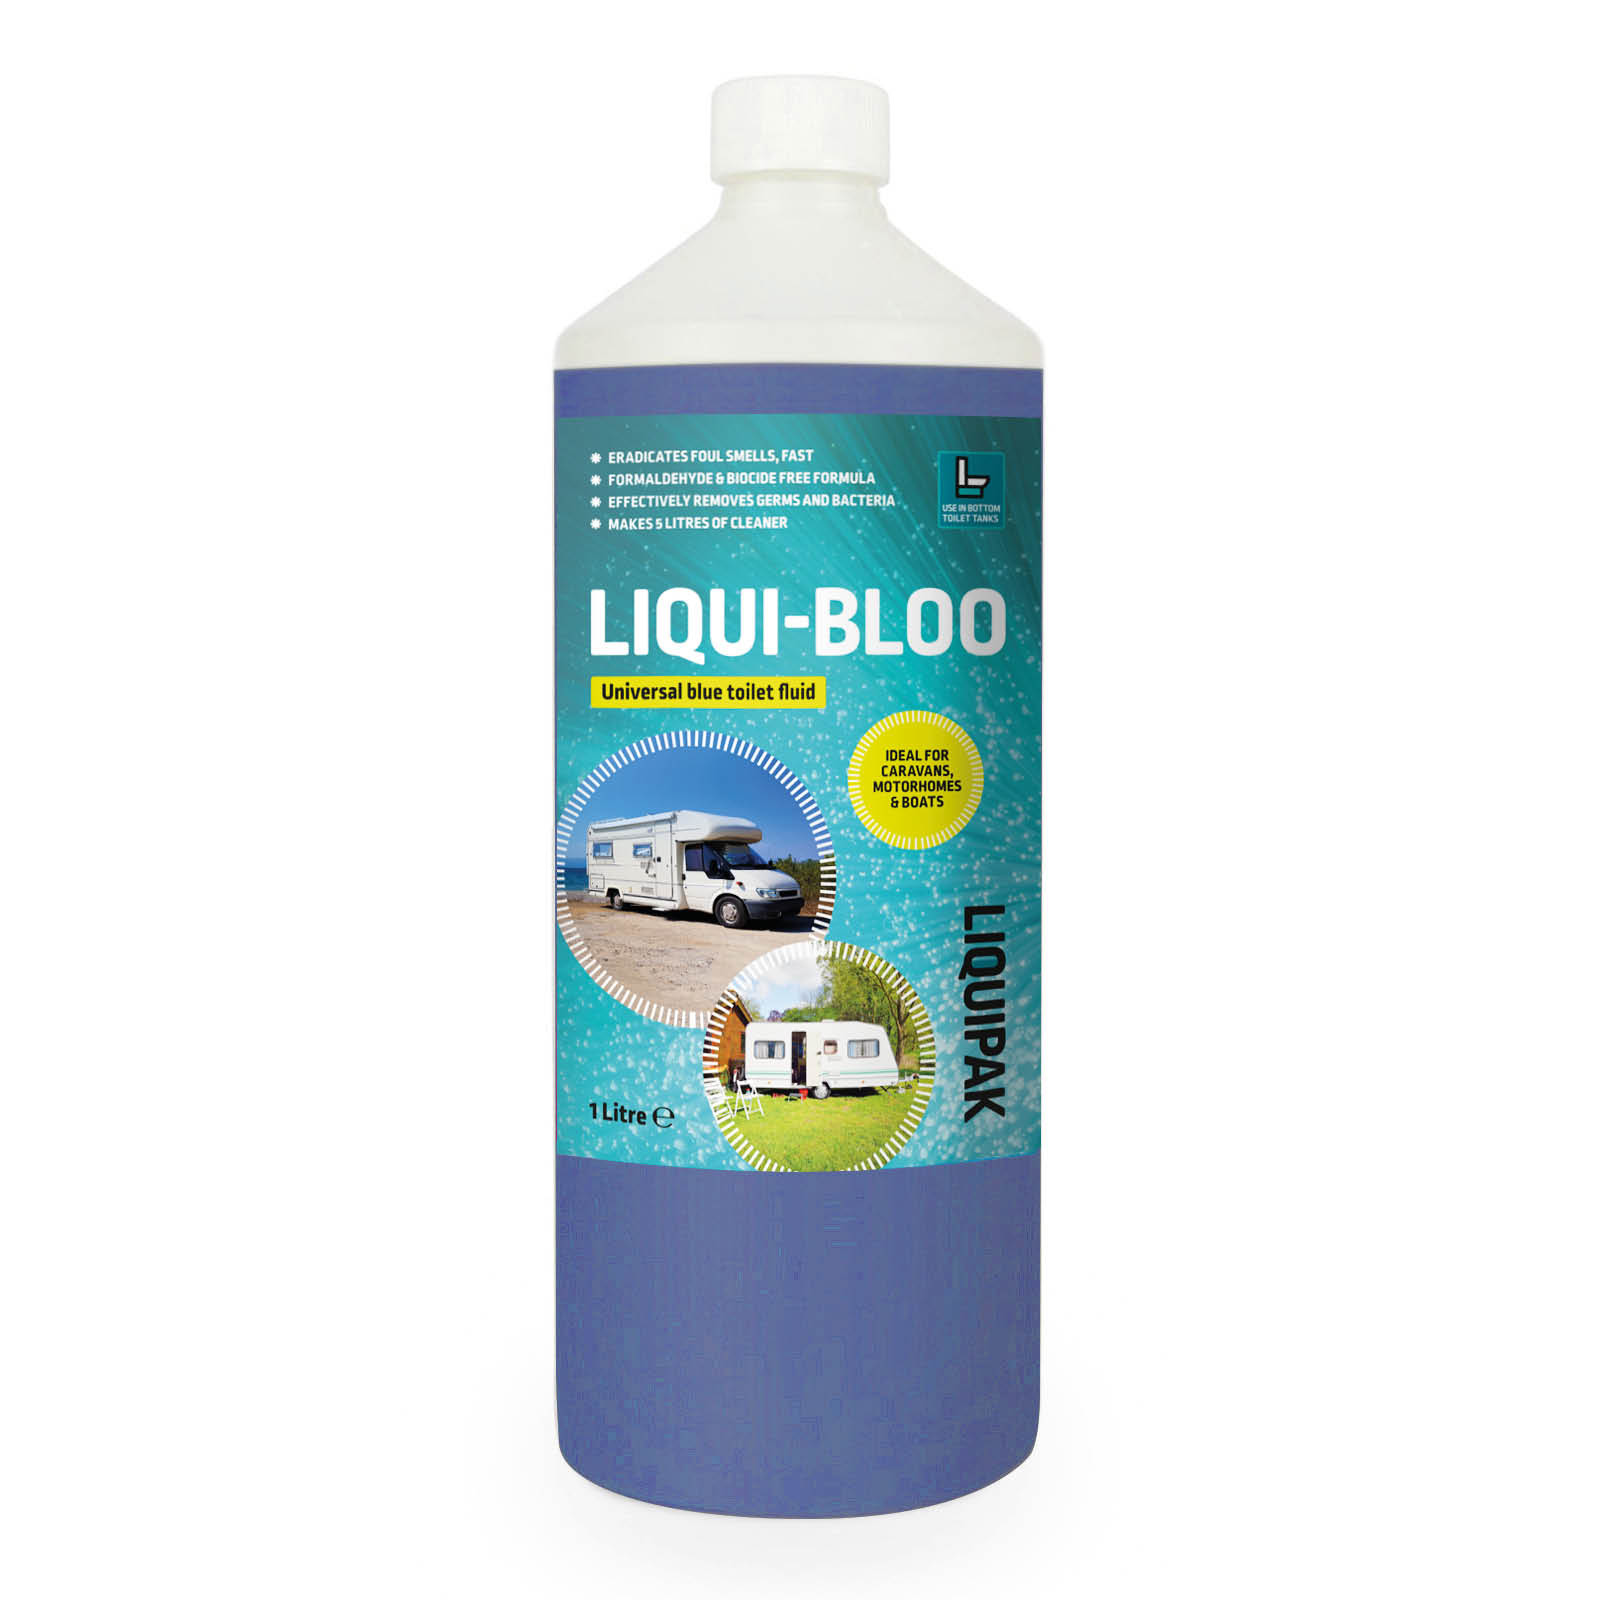 Liqui-Bloo | Toilet Chemical for Caravans